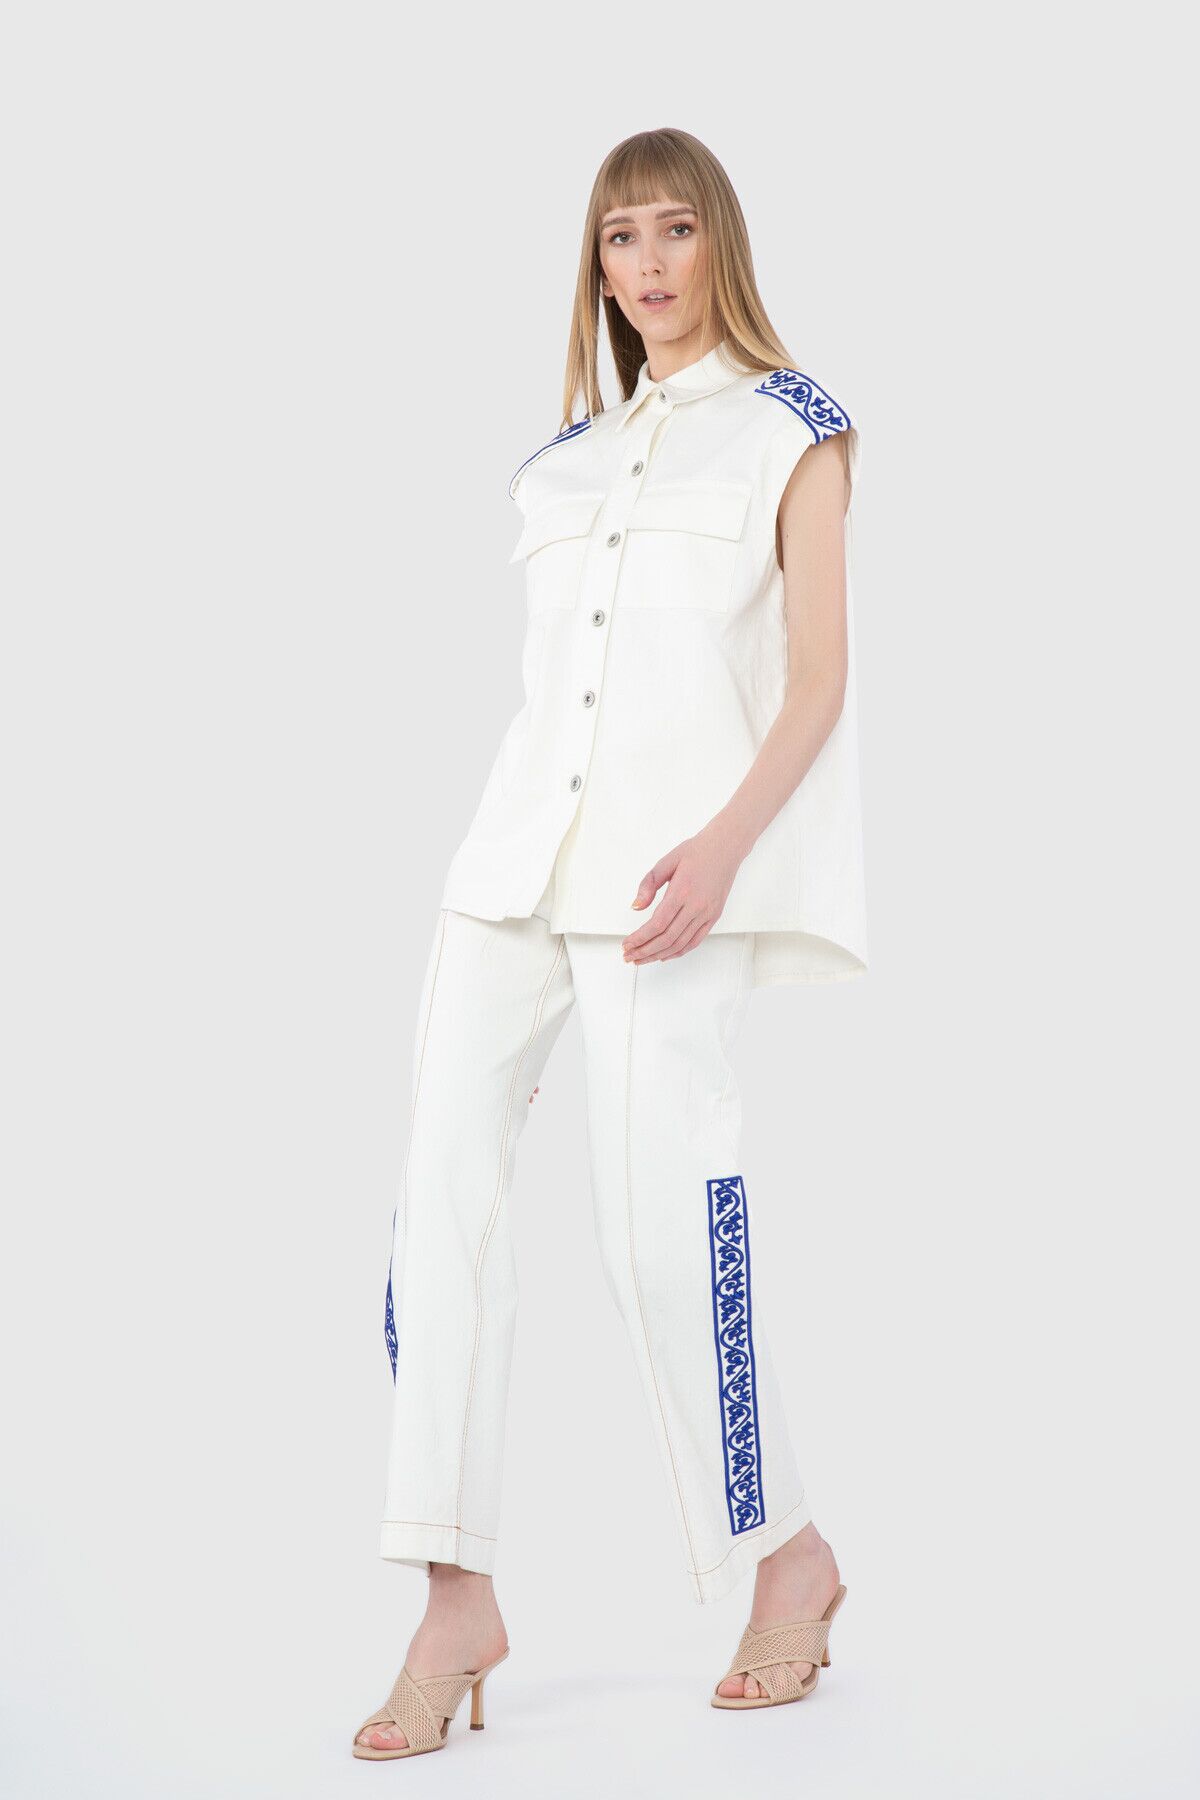  GIZIA - Sleeveless White Jacket with Embroidered Shoulders